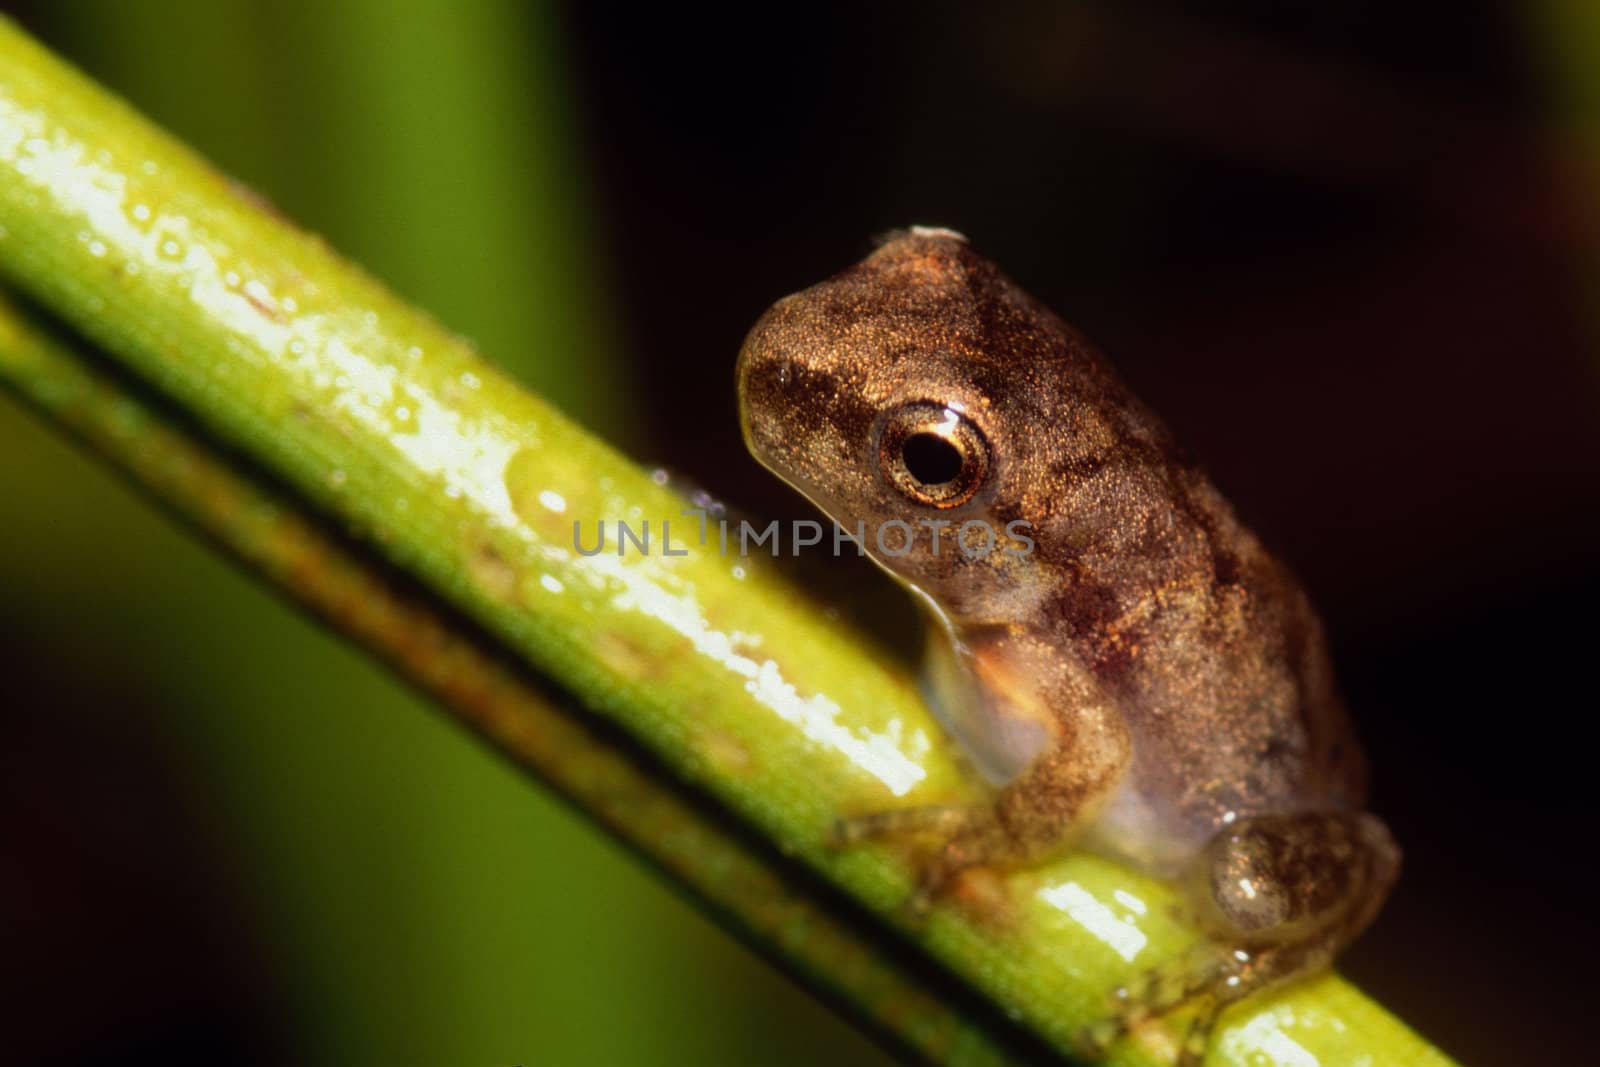 Tiny tree frog sitting on a grass stem